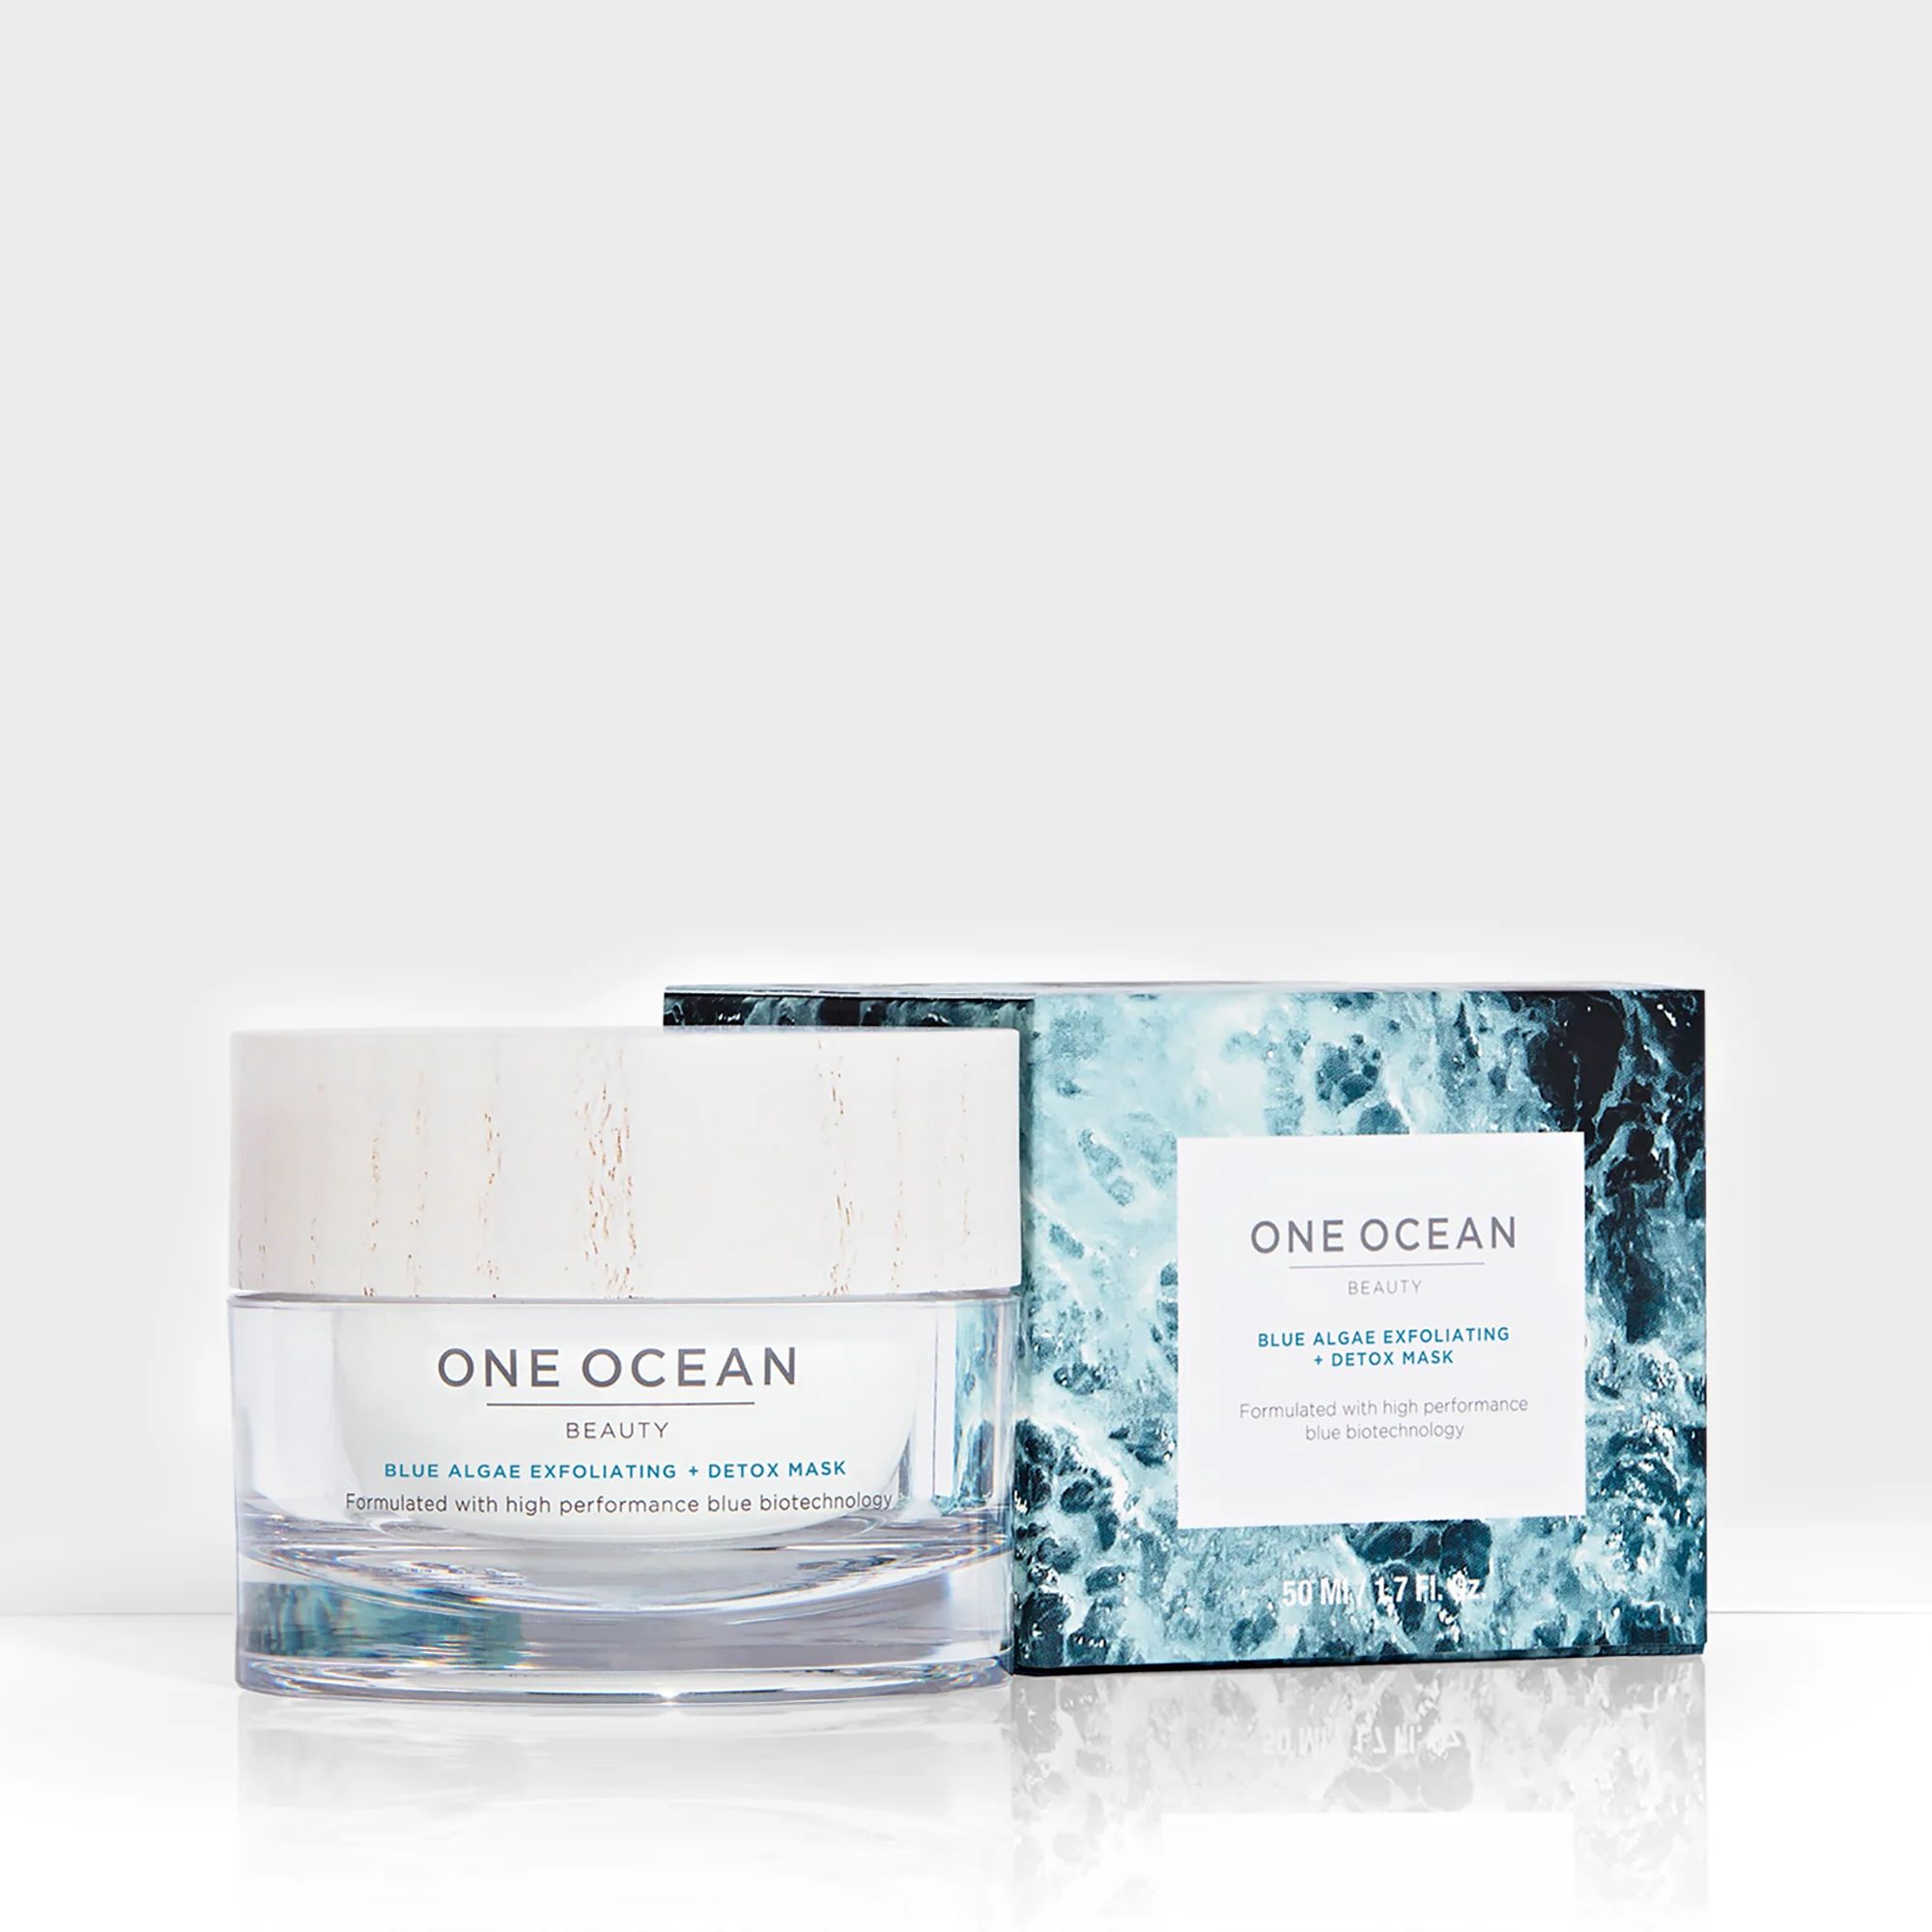 Blue Algae Exfoliating + Detox Mask | One Ocean Beauty